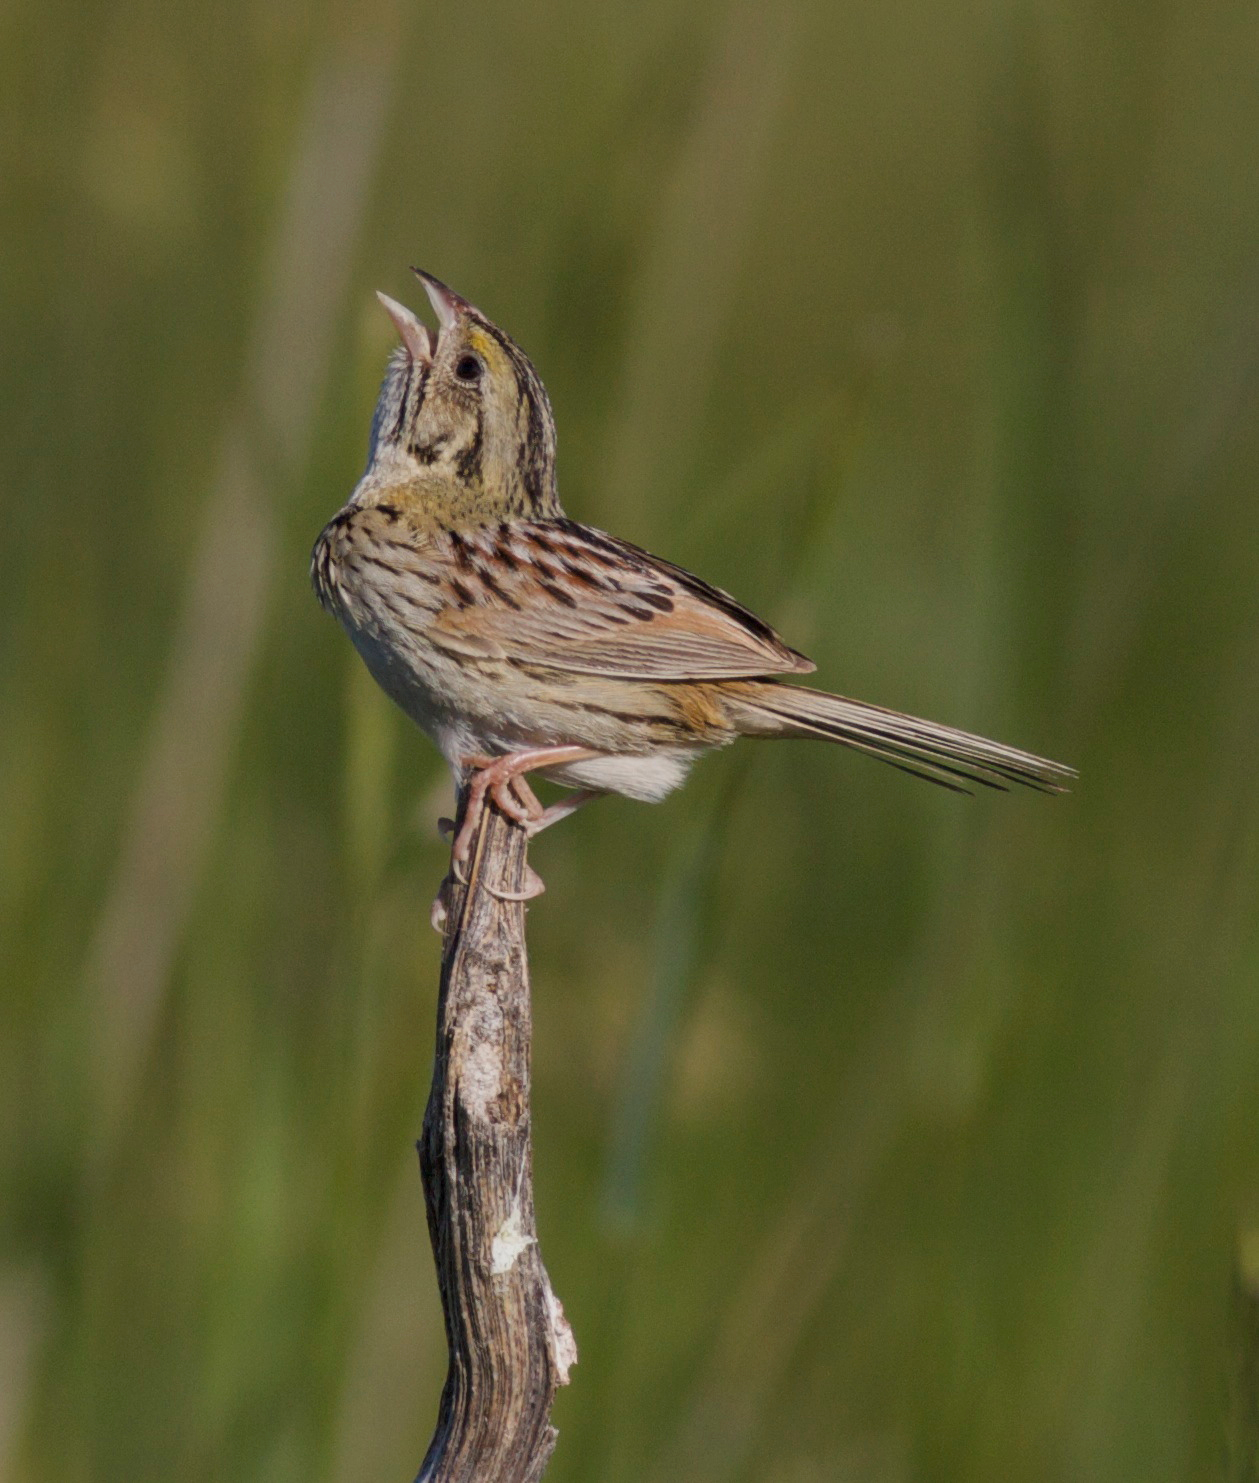   Henslow's sparrow, photo by Arlene Koziol    